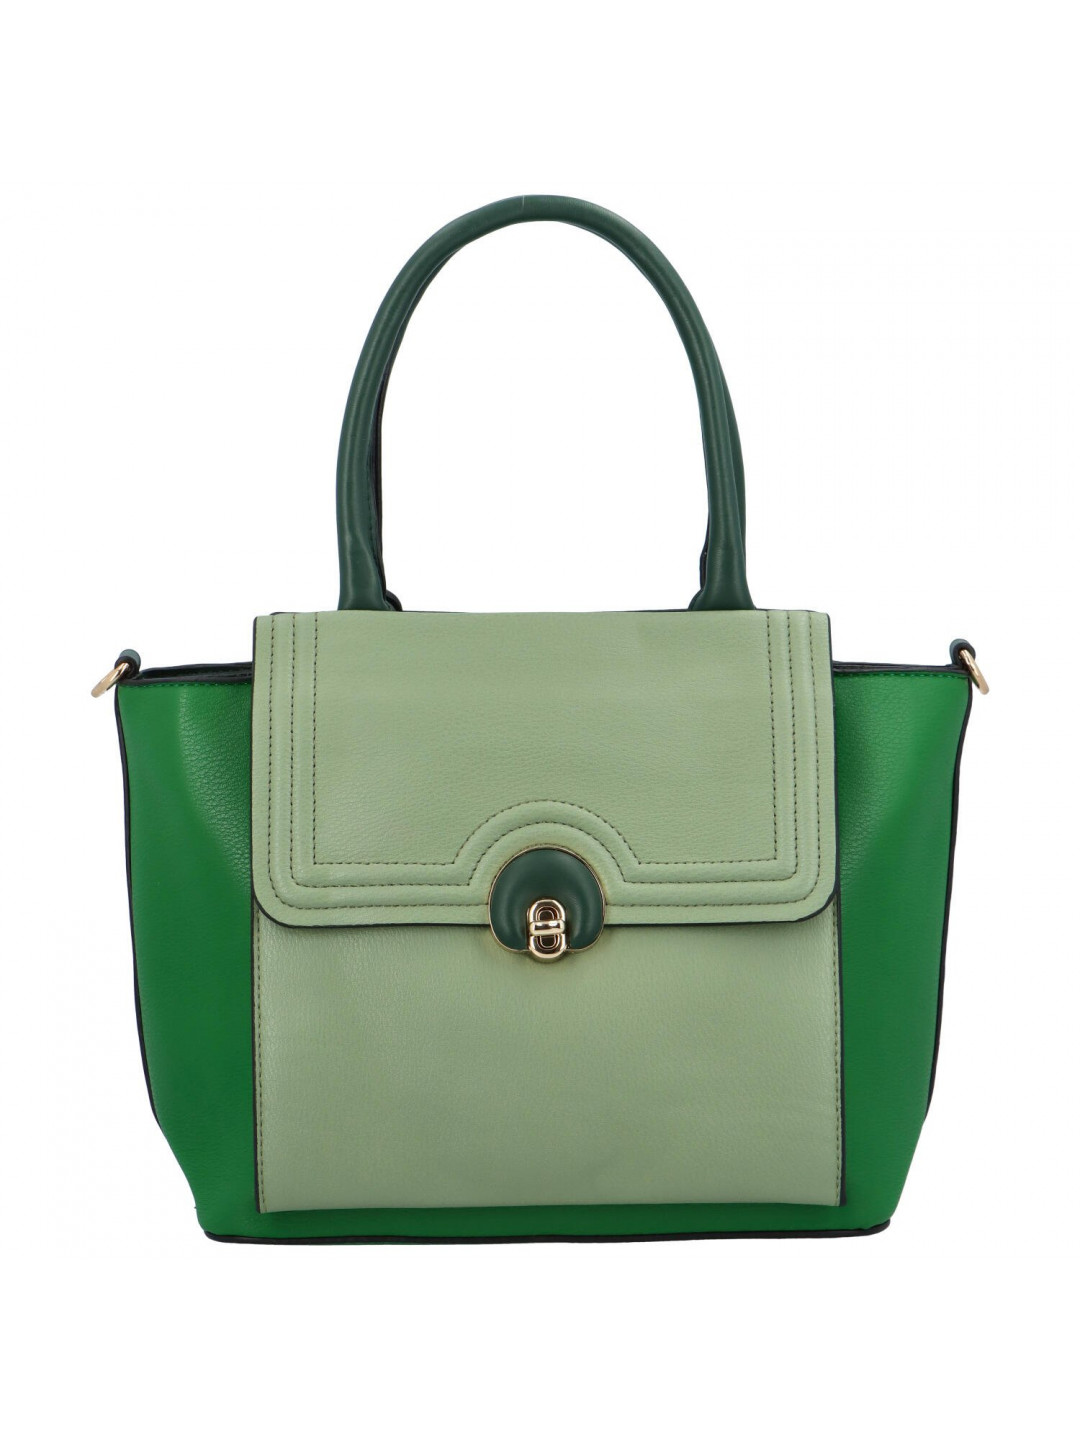 Dámská kabelka přes rameno zelená – MARIA C Ekoteria